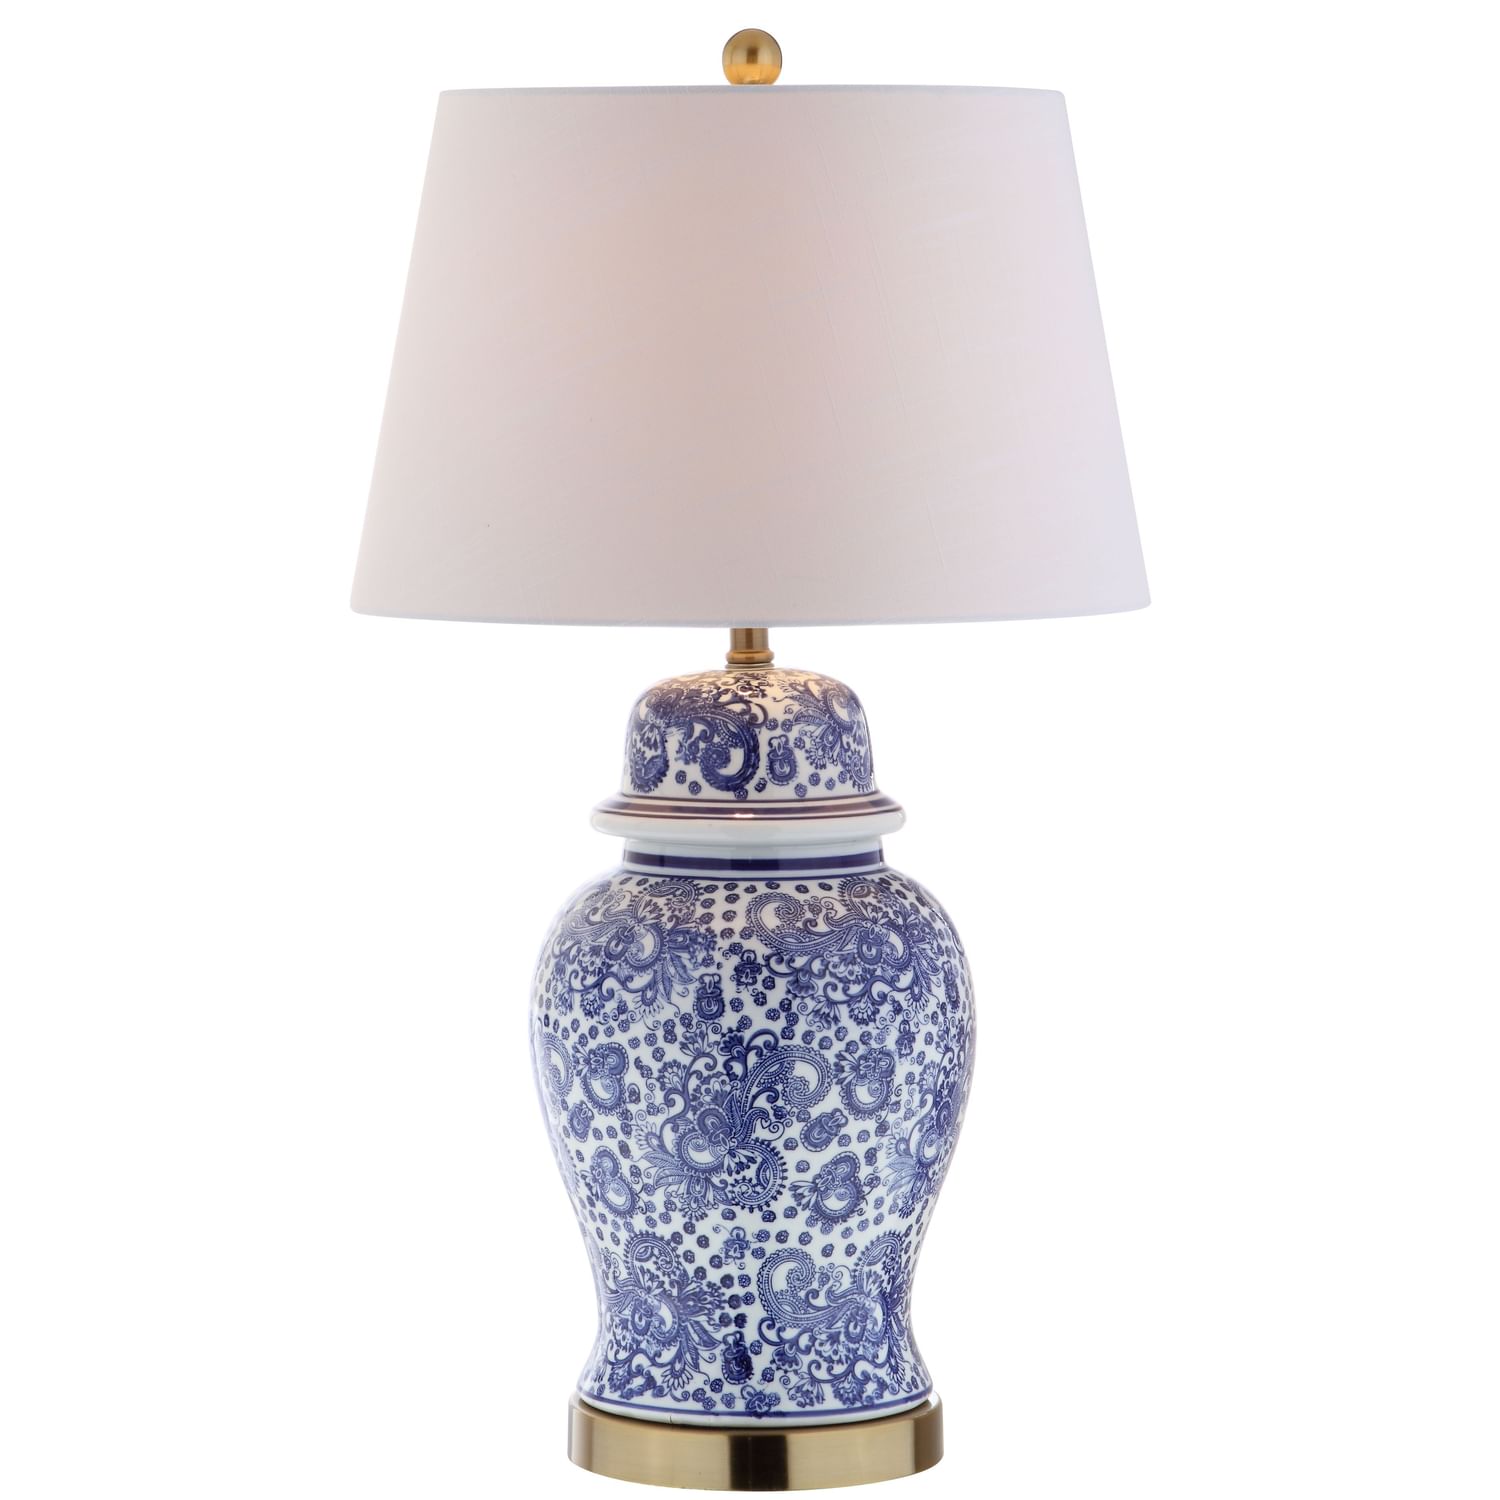 JONATHAN Y Ellis Ceramic Table Lamp, Blue and White eBay